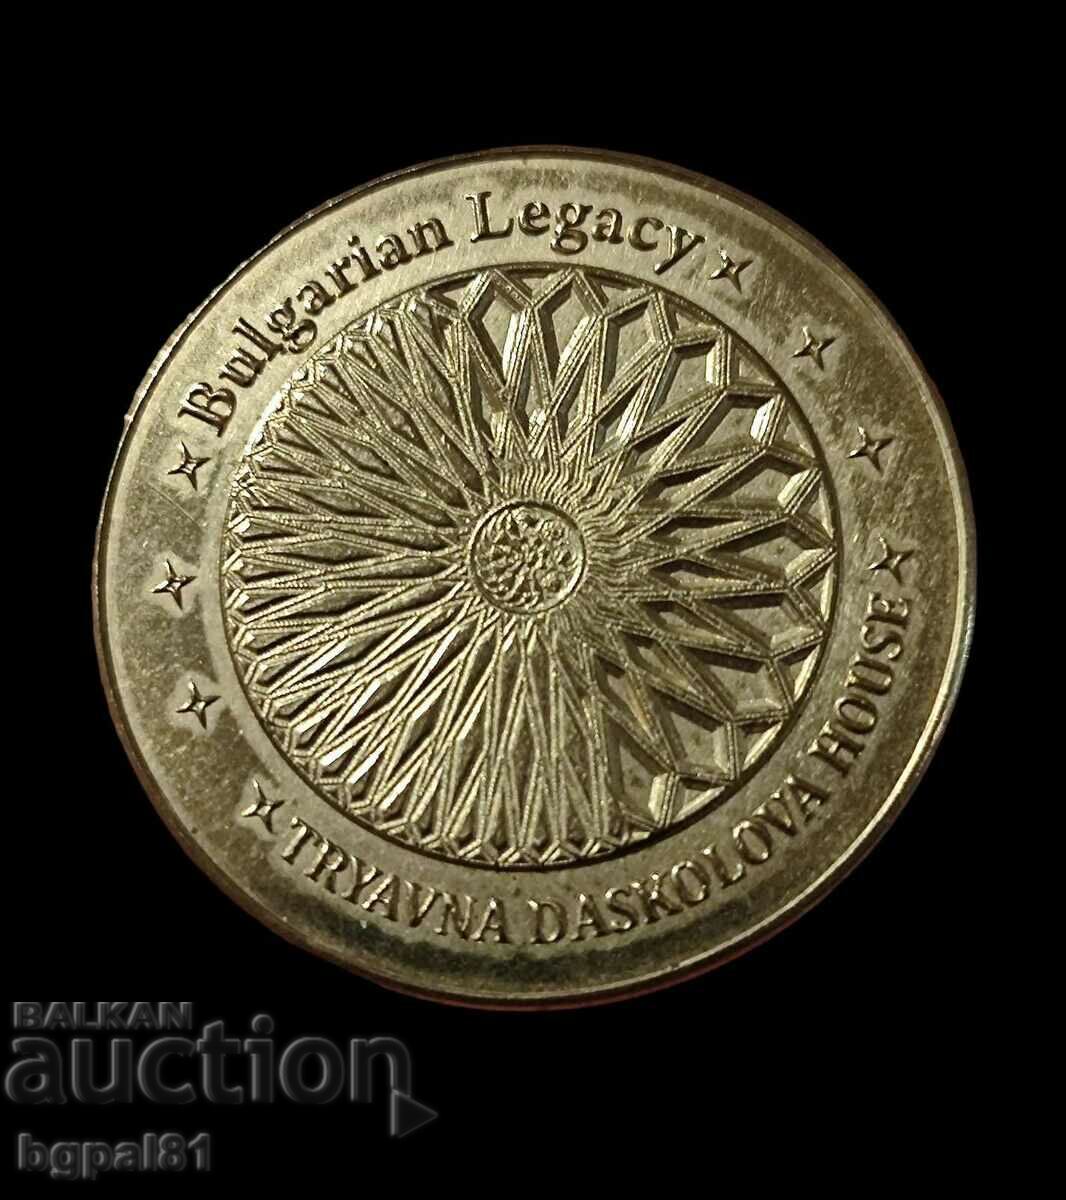 Troyan Daskalova House - "Bulgarian legacy" medal issue